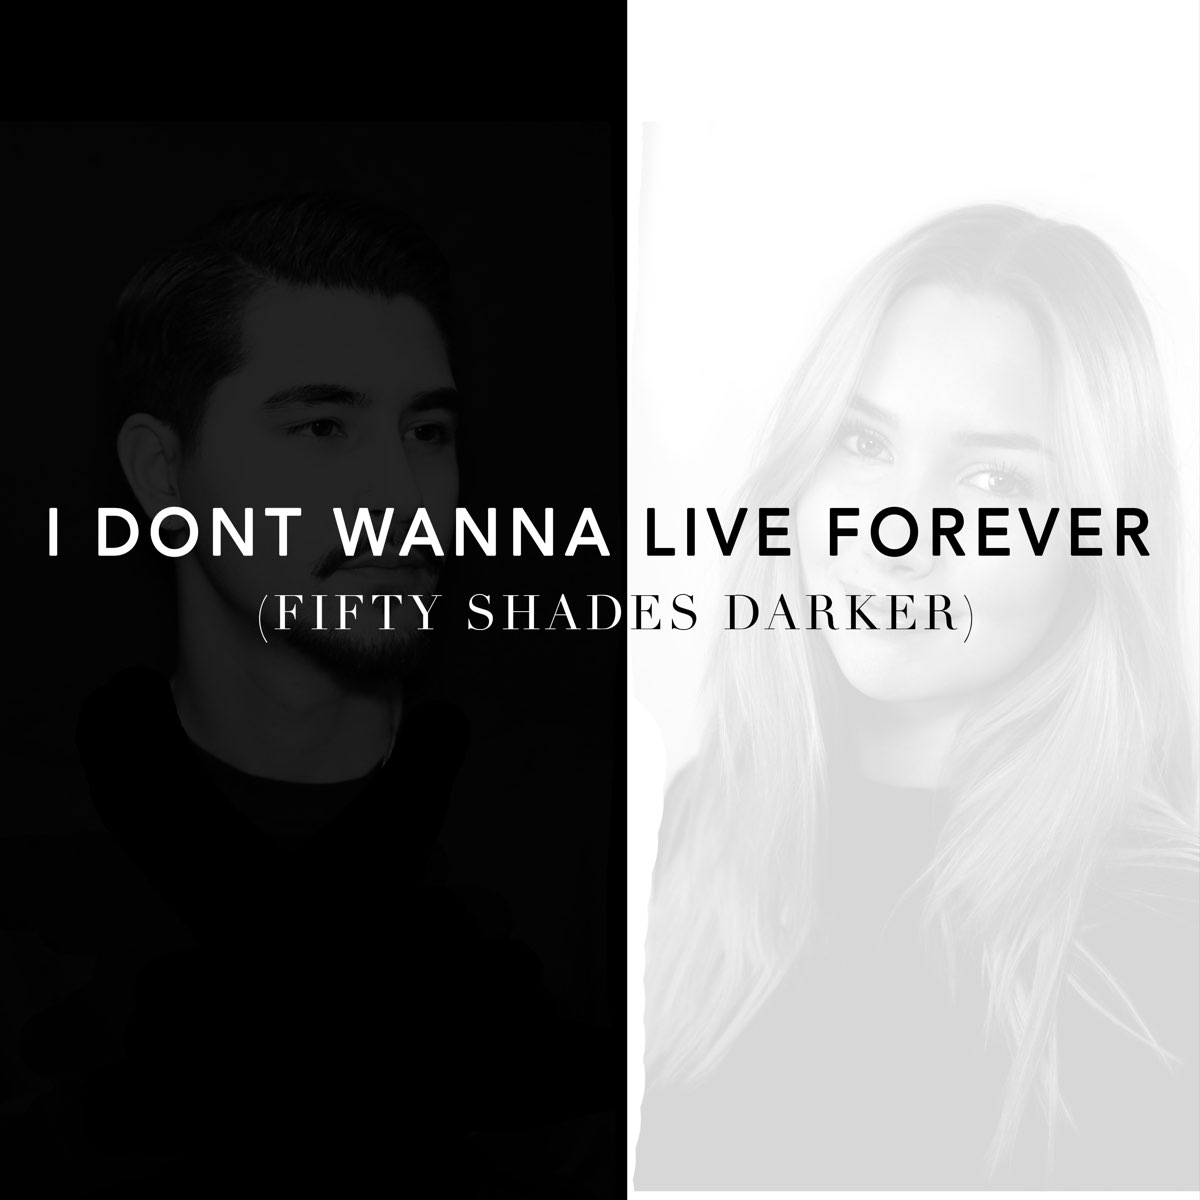 I don't wanna Live Forever (Fifty Shades Darker). I wanna Live текст. I wanna Live wanna Live перевод. Текст песни i wanna Live wanna Live.